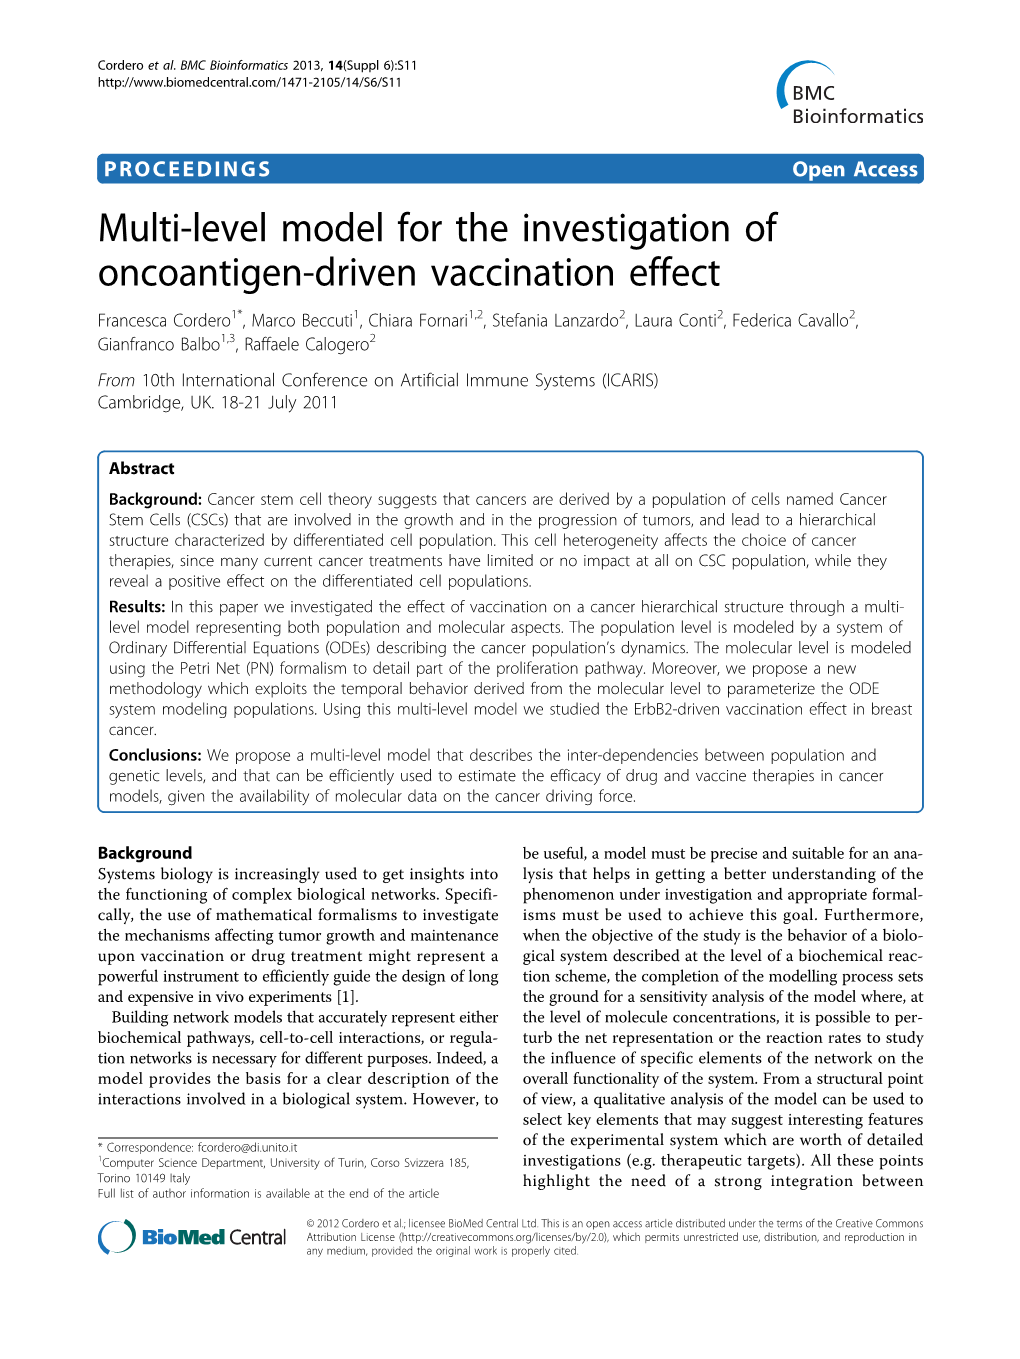 Multi-Level Model for the Investigation of Oncoantigen-Driven Vaccination